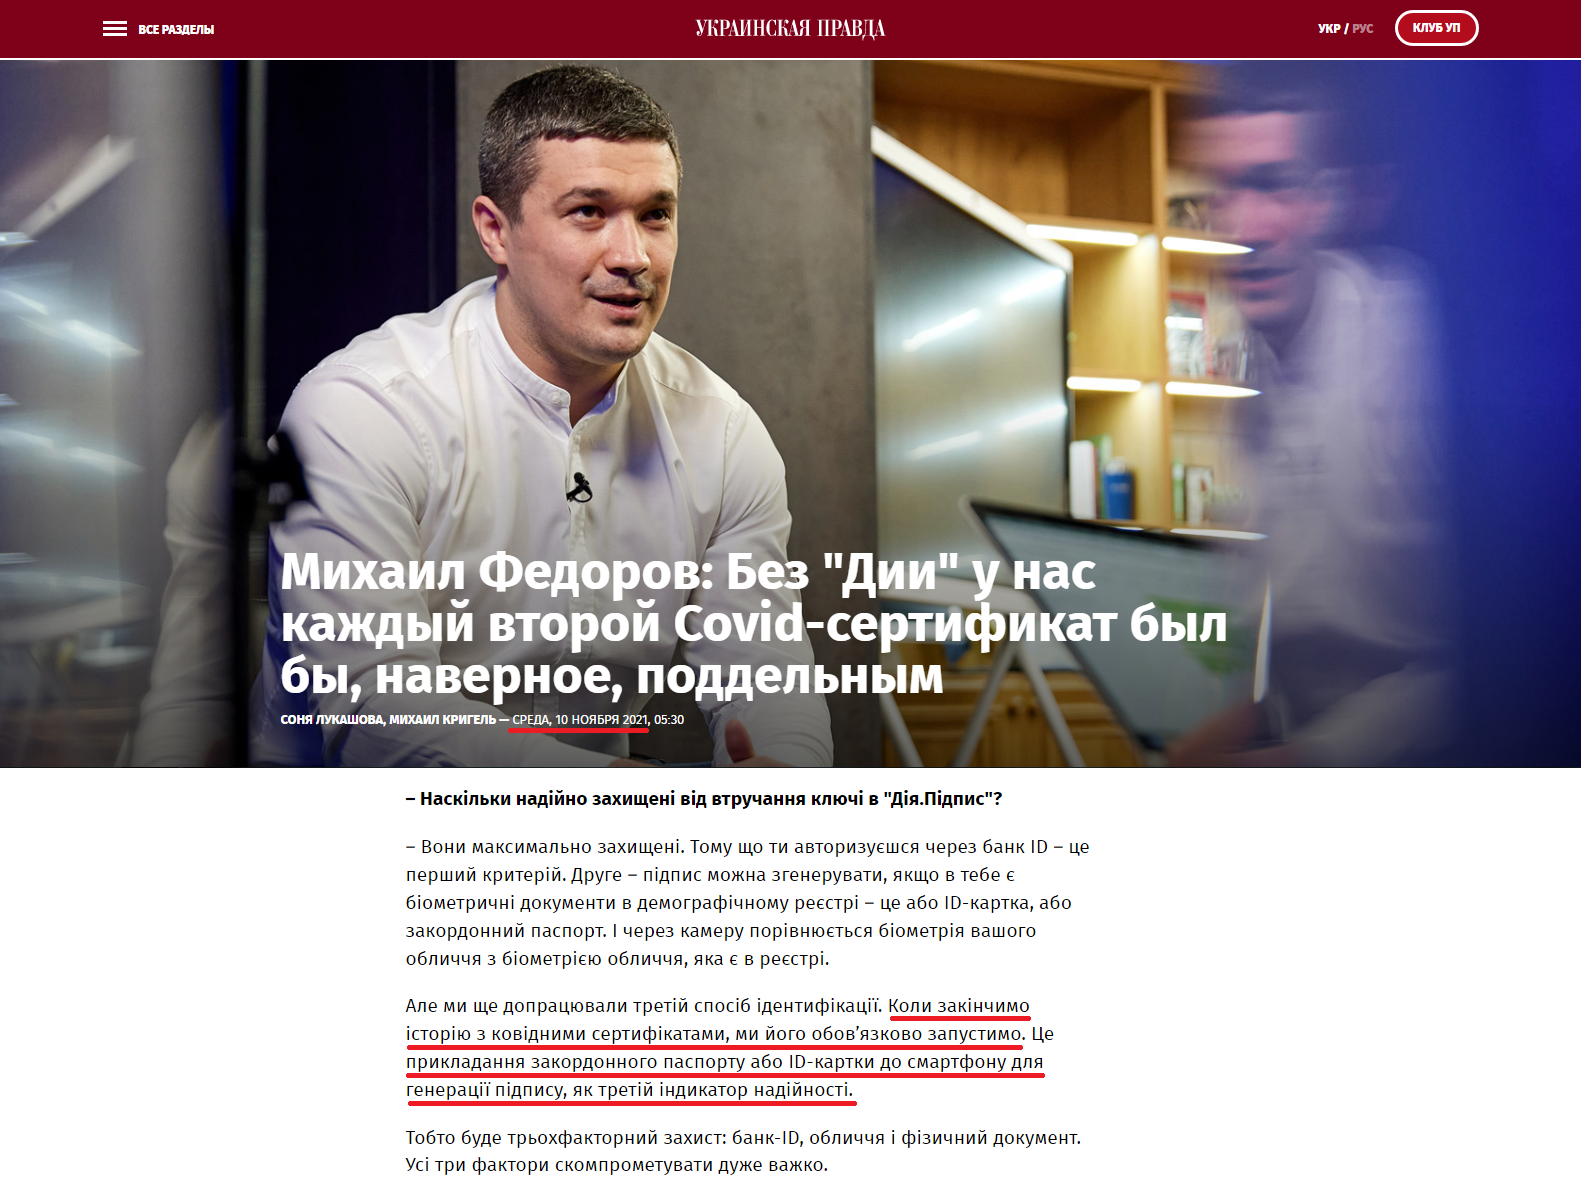 https://www.pravda.com.ua/rus/articles/2021/11/10/7313425/